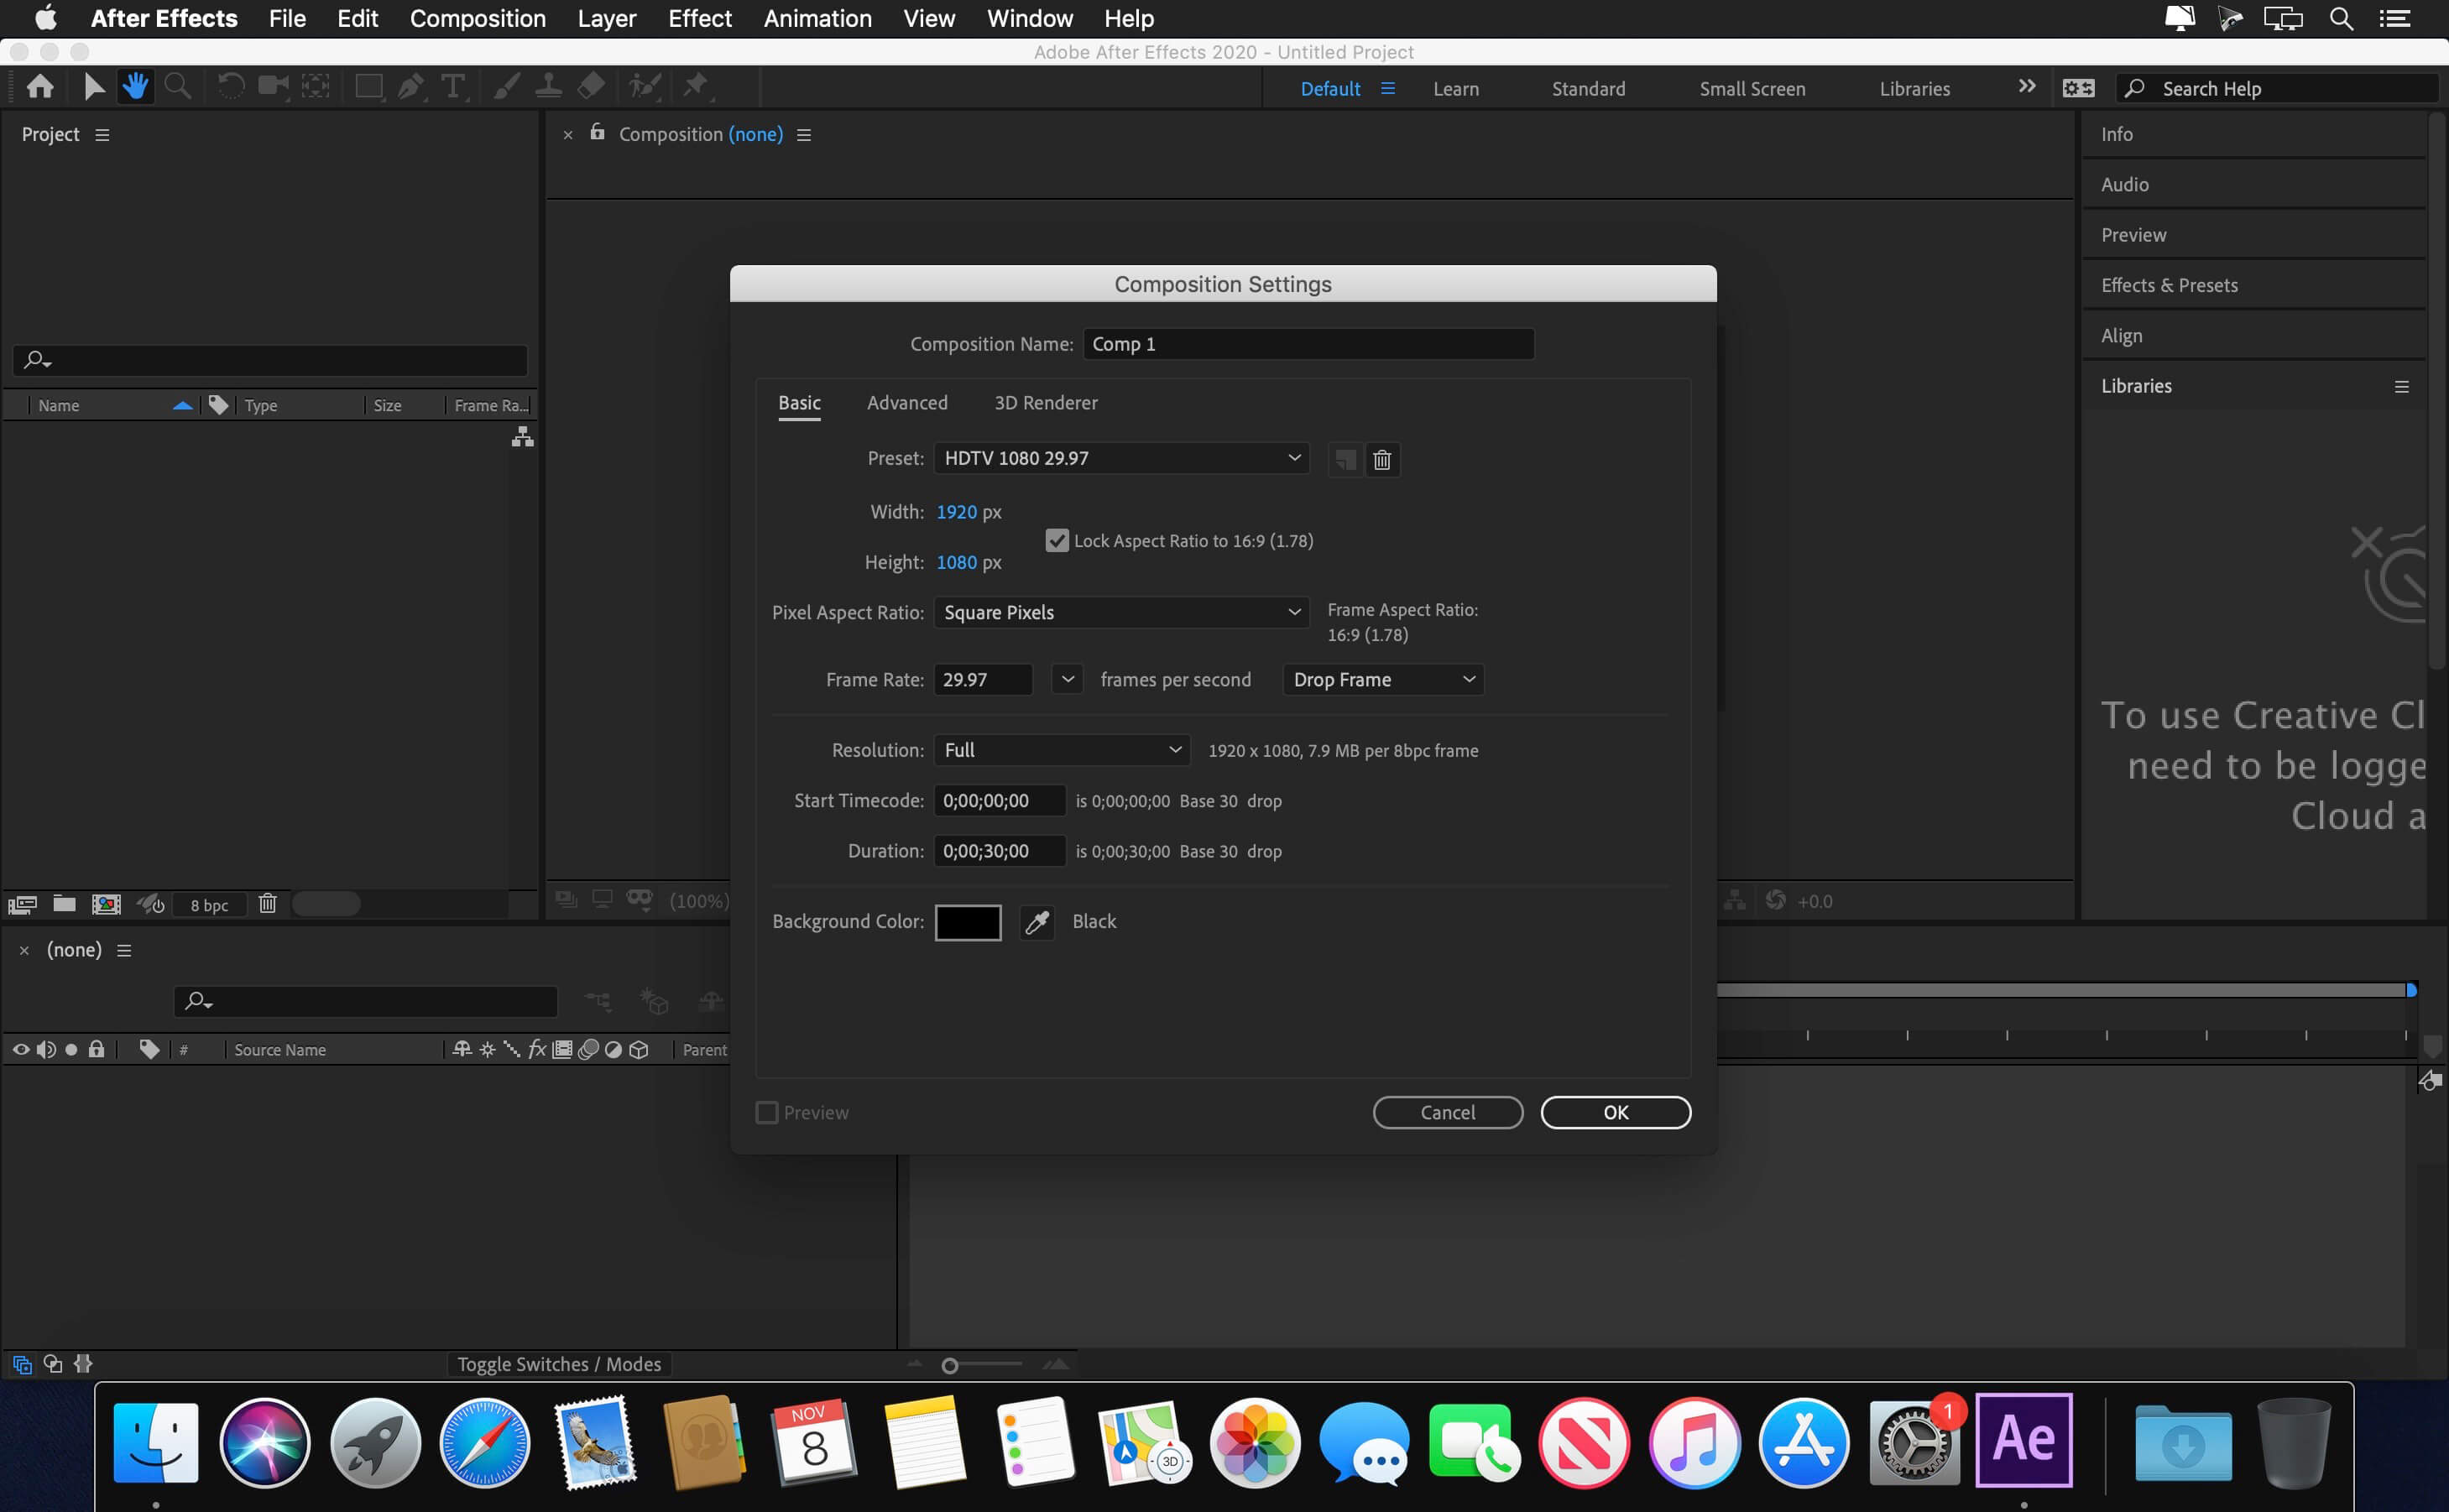 Adobe After Effects 202 0 v17.0.0.557 macOS